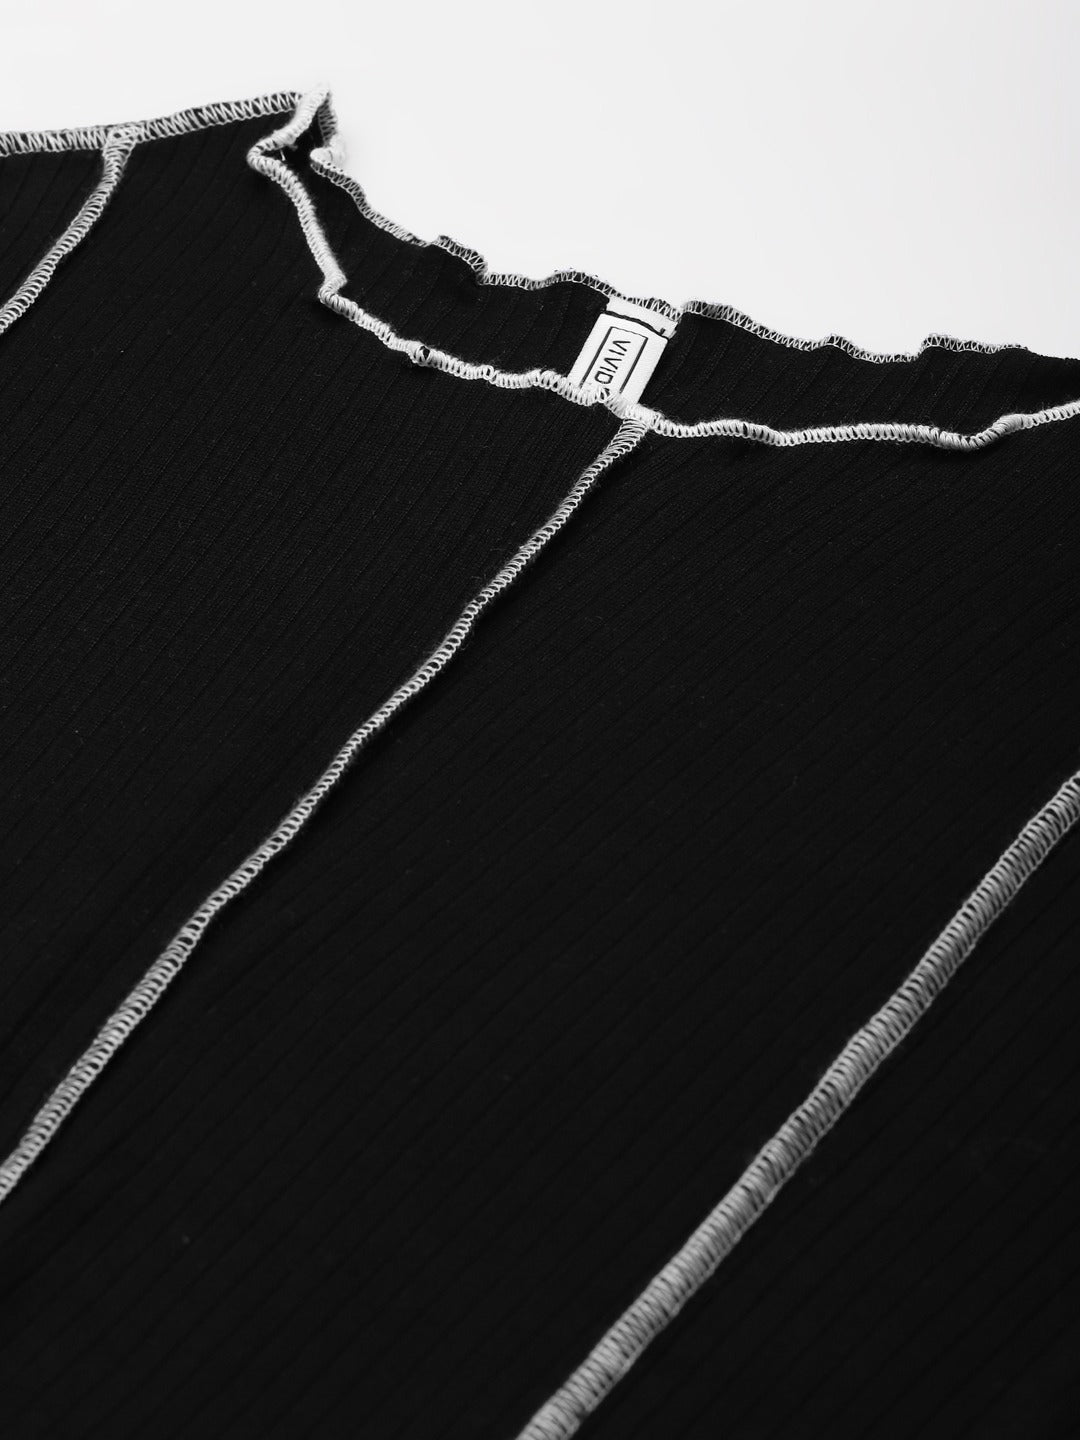 Black Striped Regular Crop Top